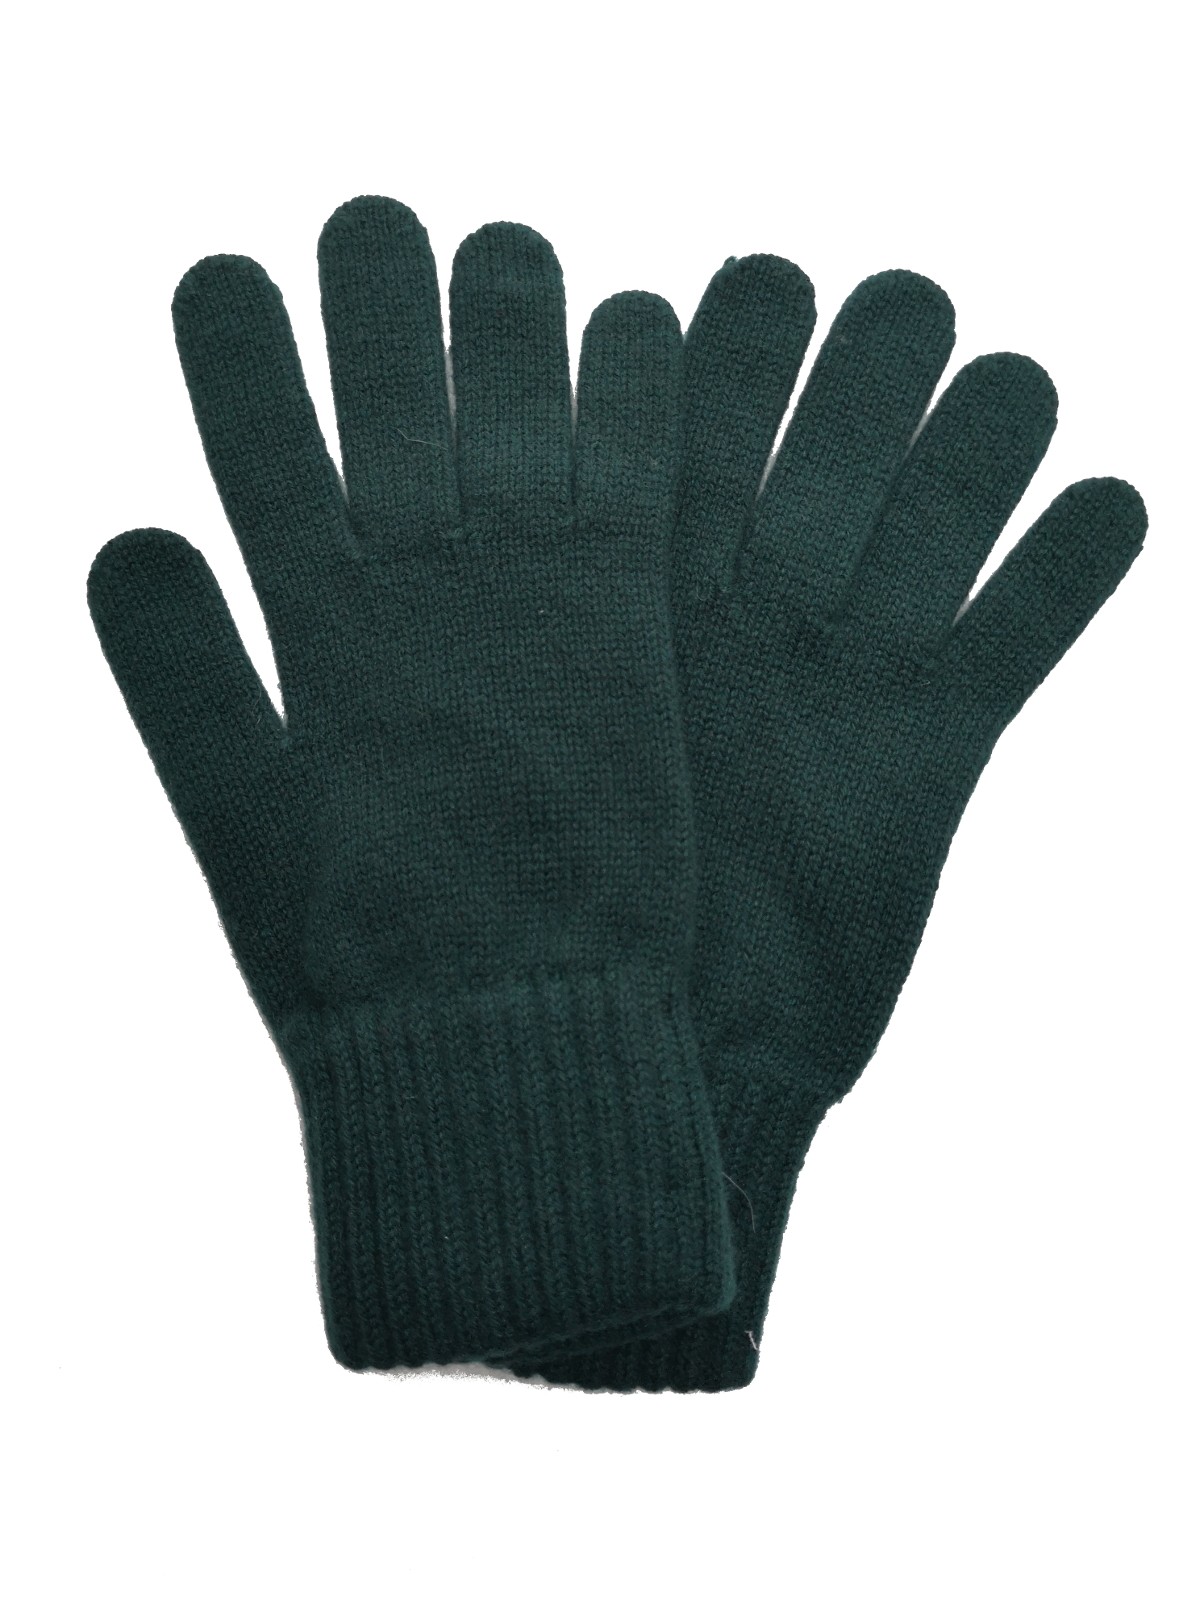 The Wardrobe Gloves